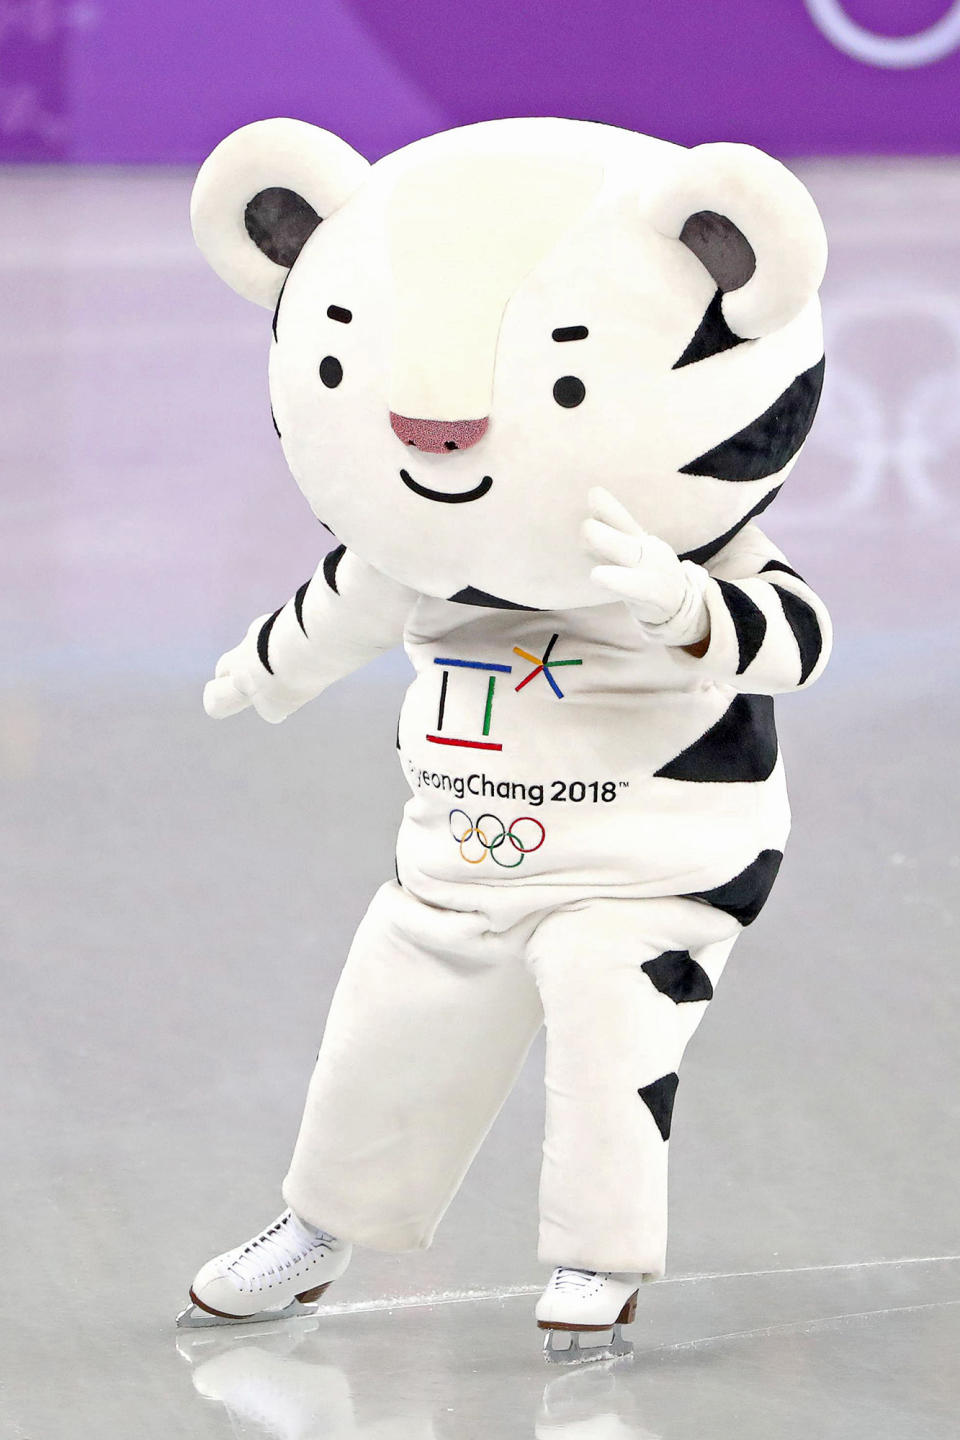 PyeongChang, 2018